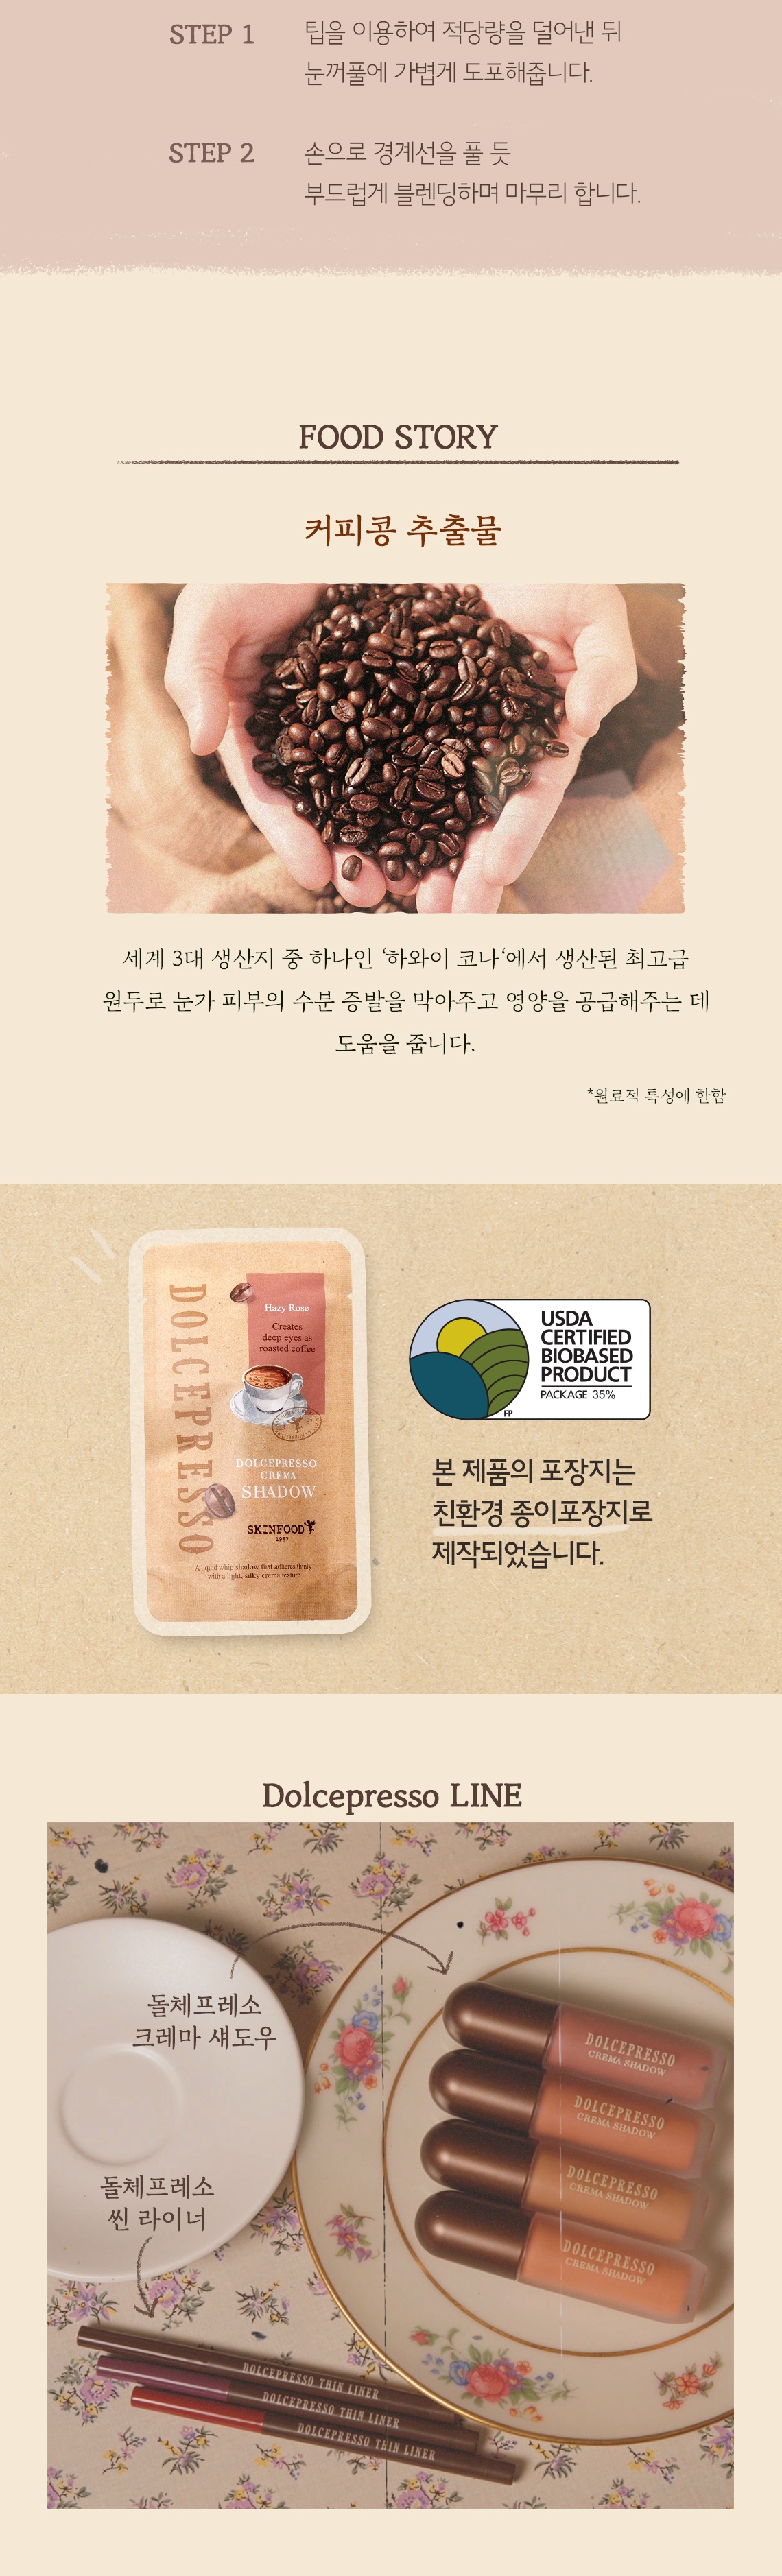 Skinfood Dolcepresso Creama Shadow korean skincare product online shop malaysia china macau3